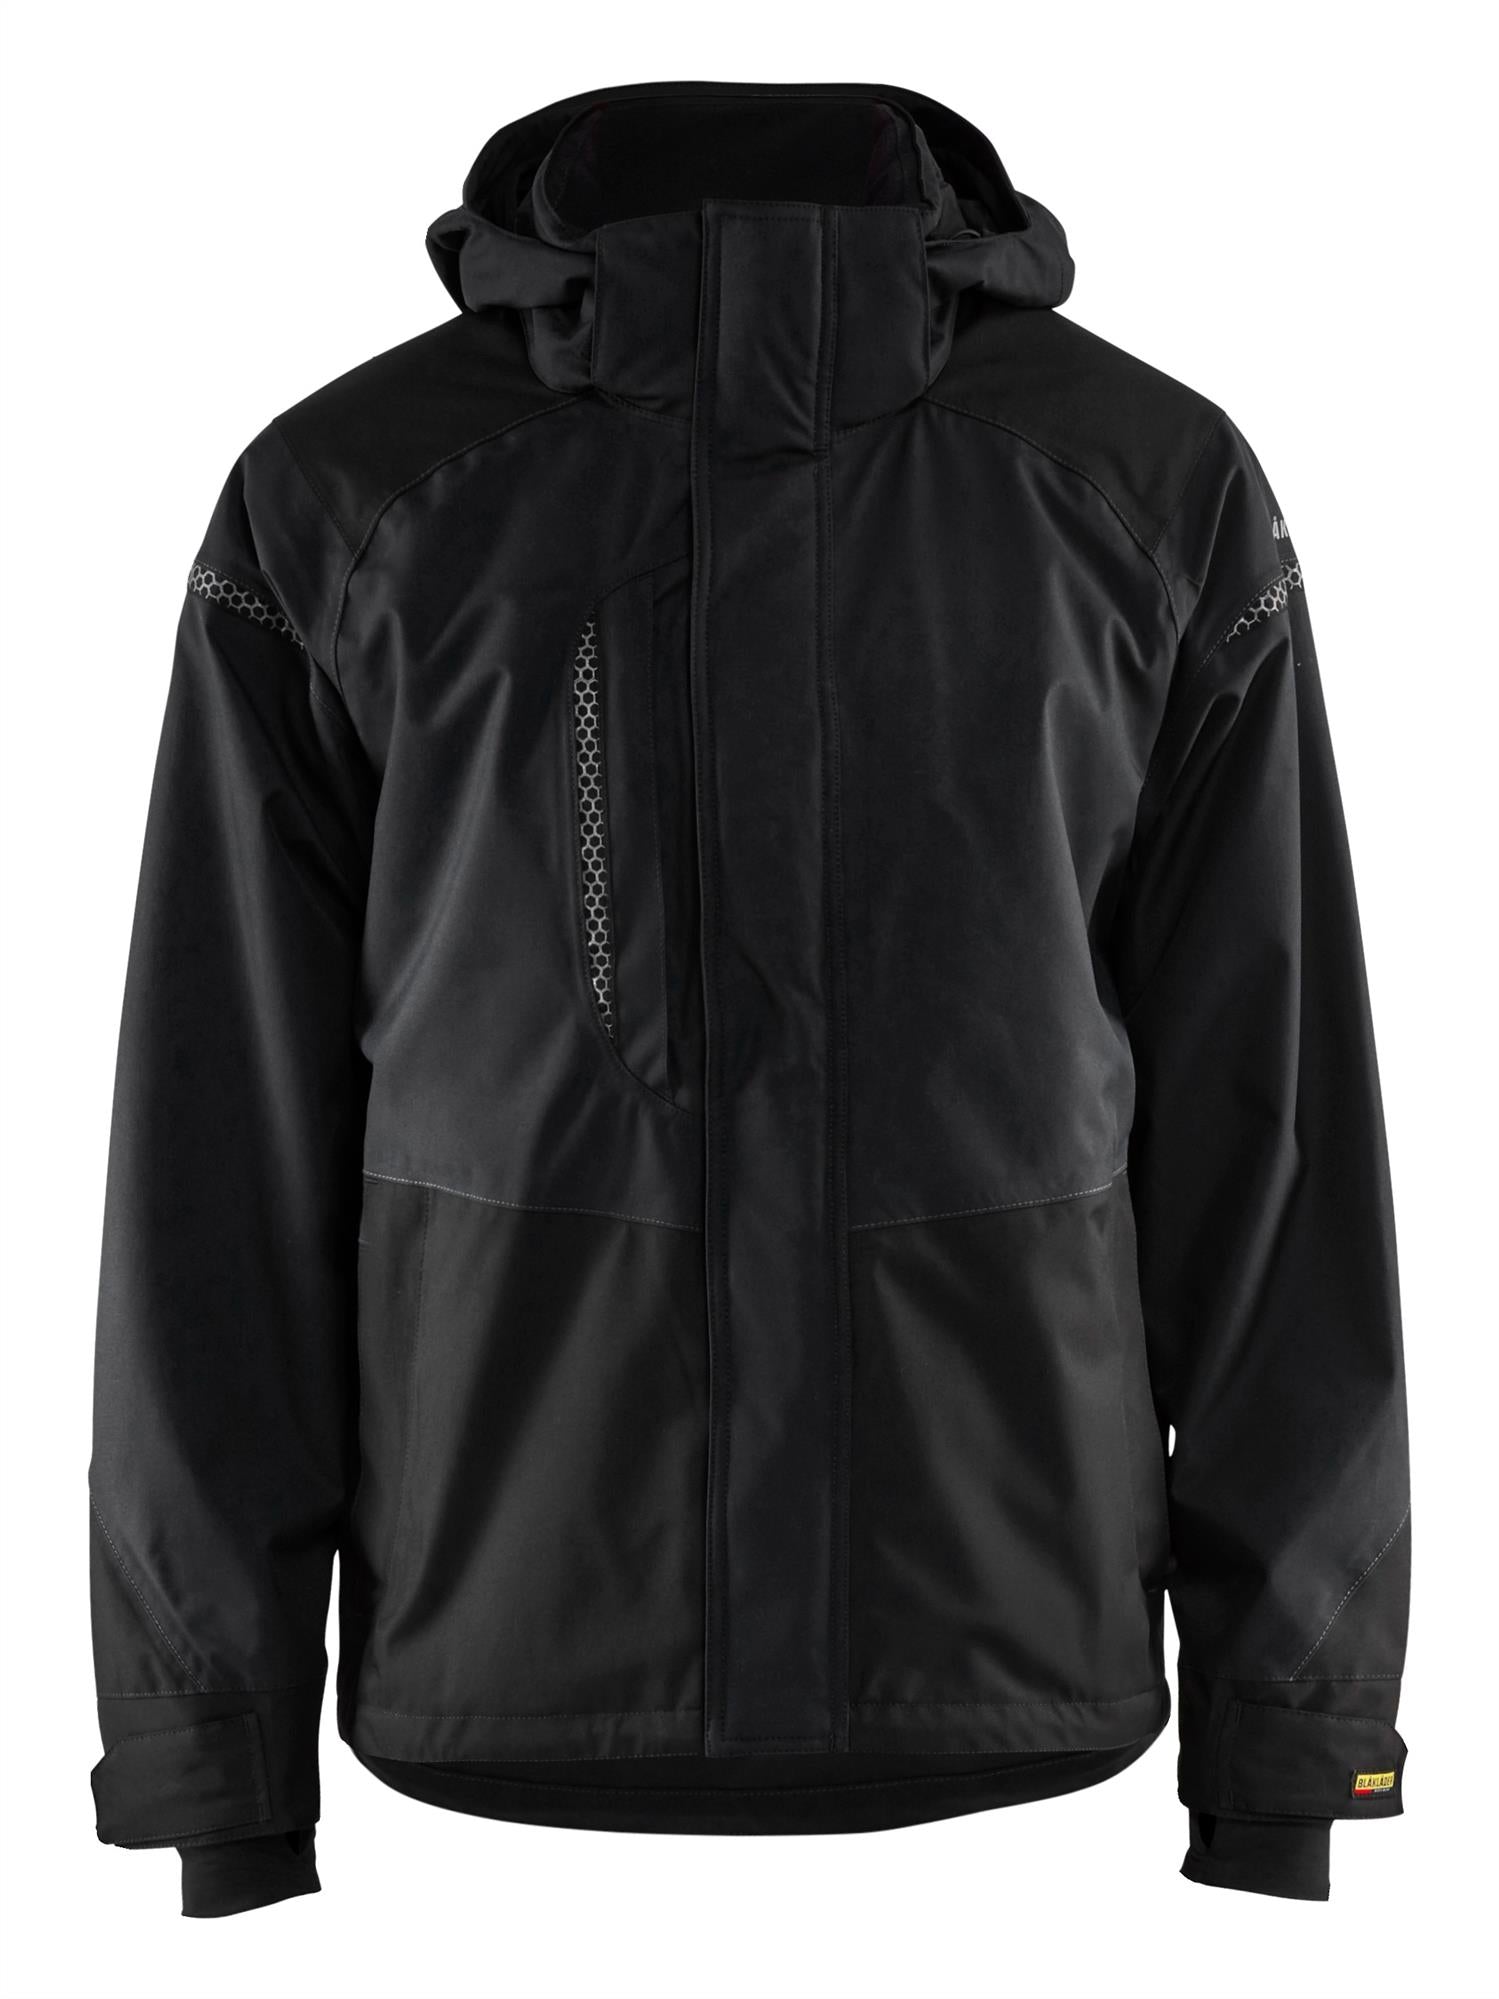 Blaklader black men's waterproof, breathable mesh-lined hooded shell jacket #4988